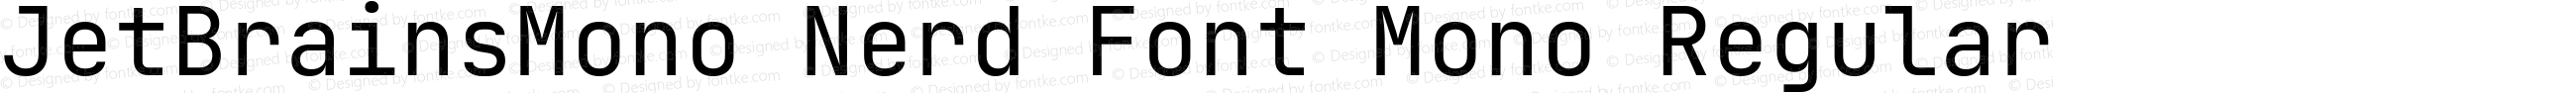 JetBrains Mono Regular Nerd Font Complete Mono